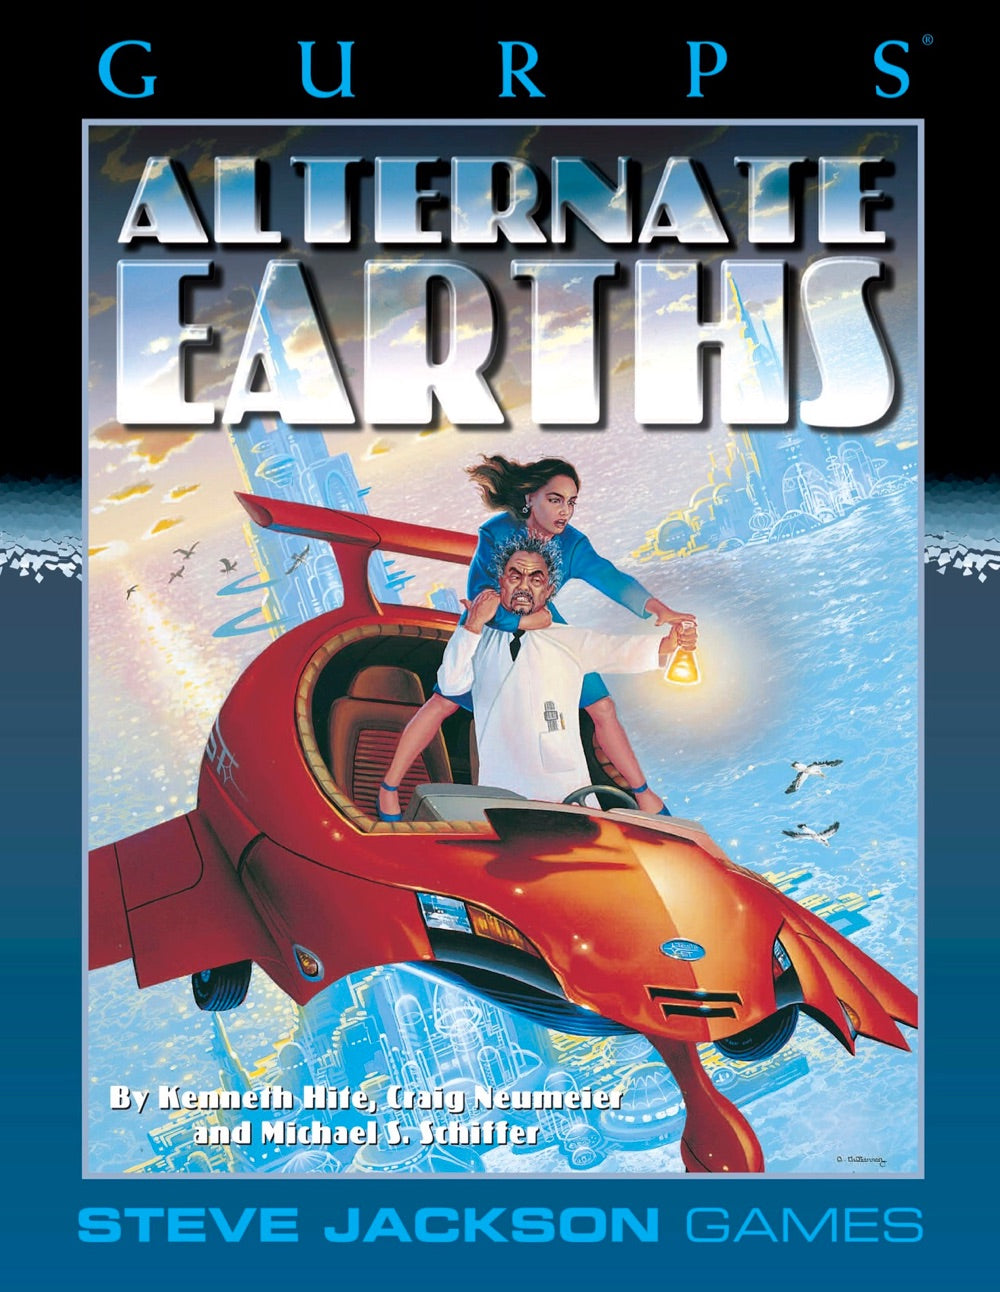 GURPS Classic: Alternate Earths